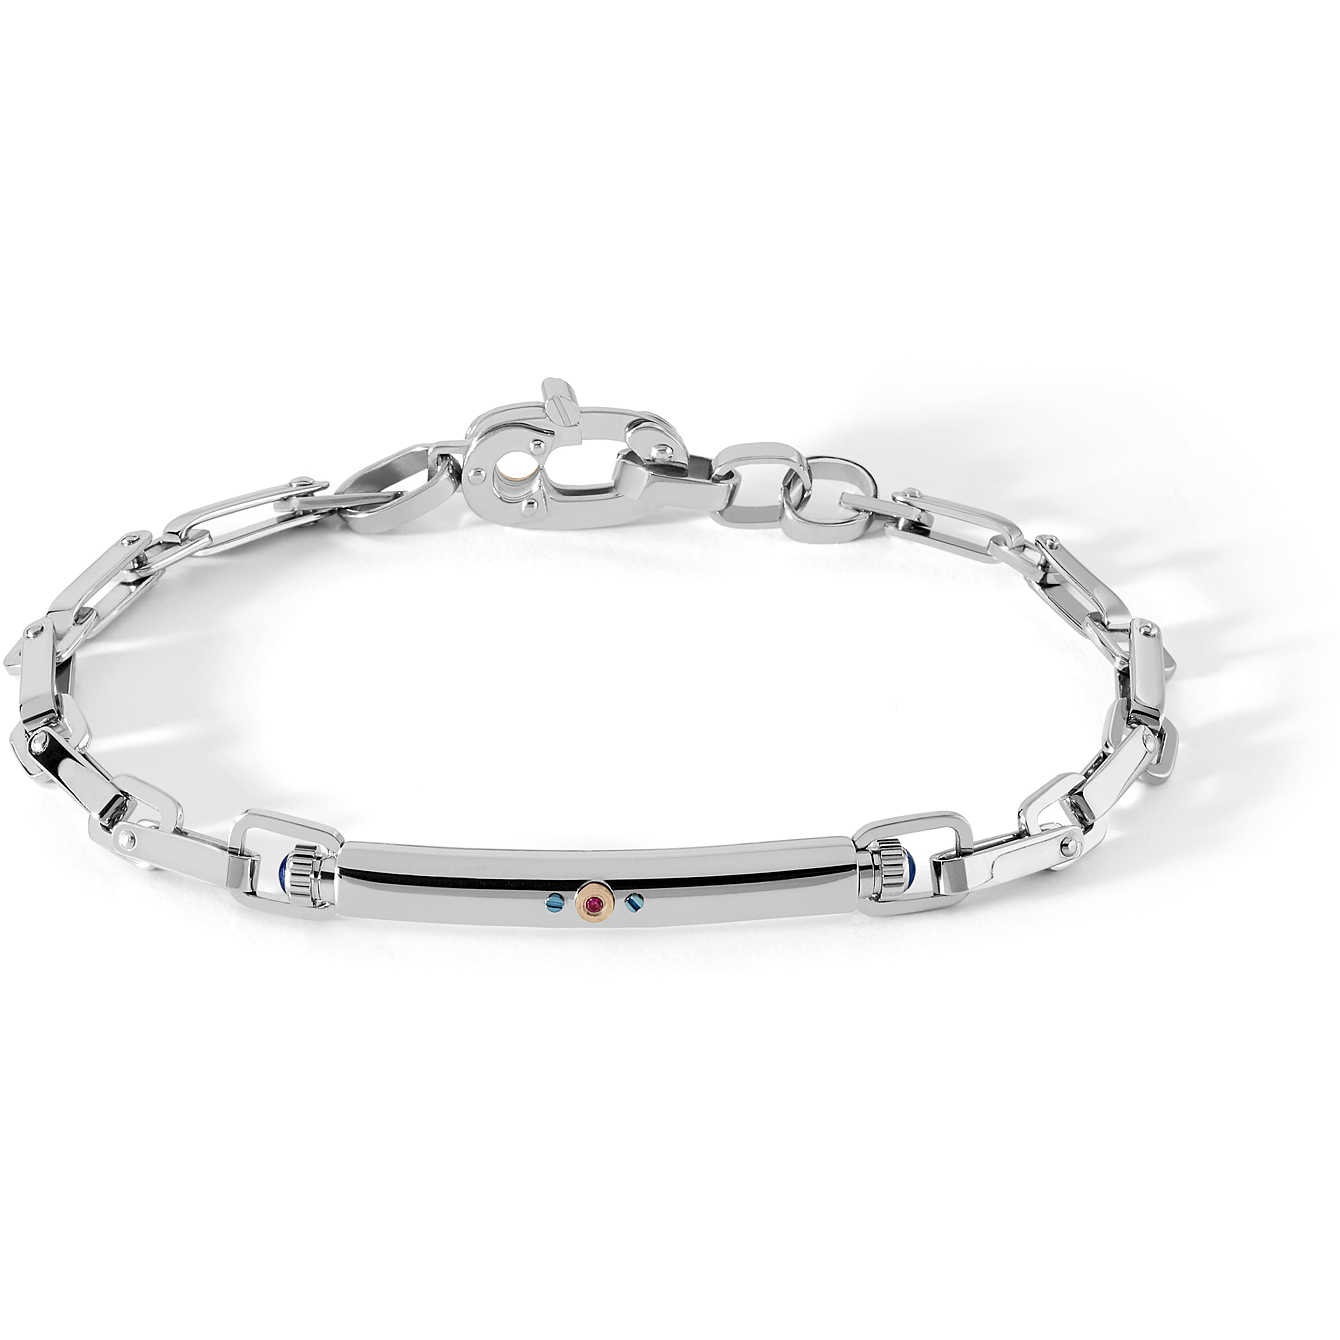 Comete Tourbillon Men’s Jewelry Bracelet UBR 824